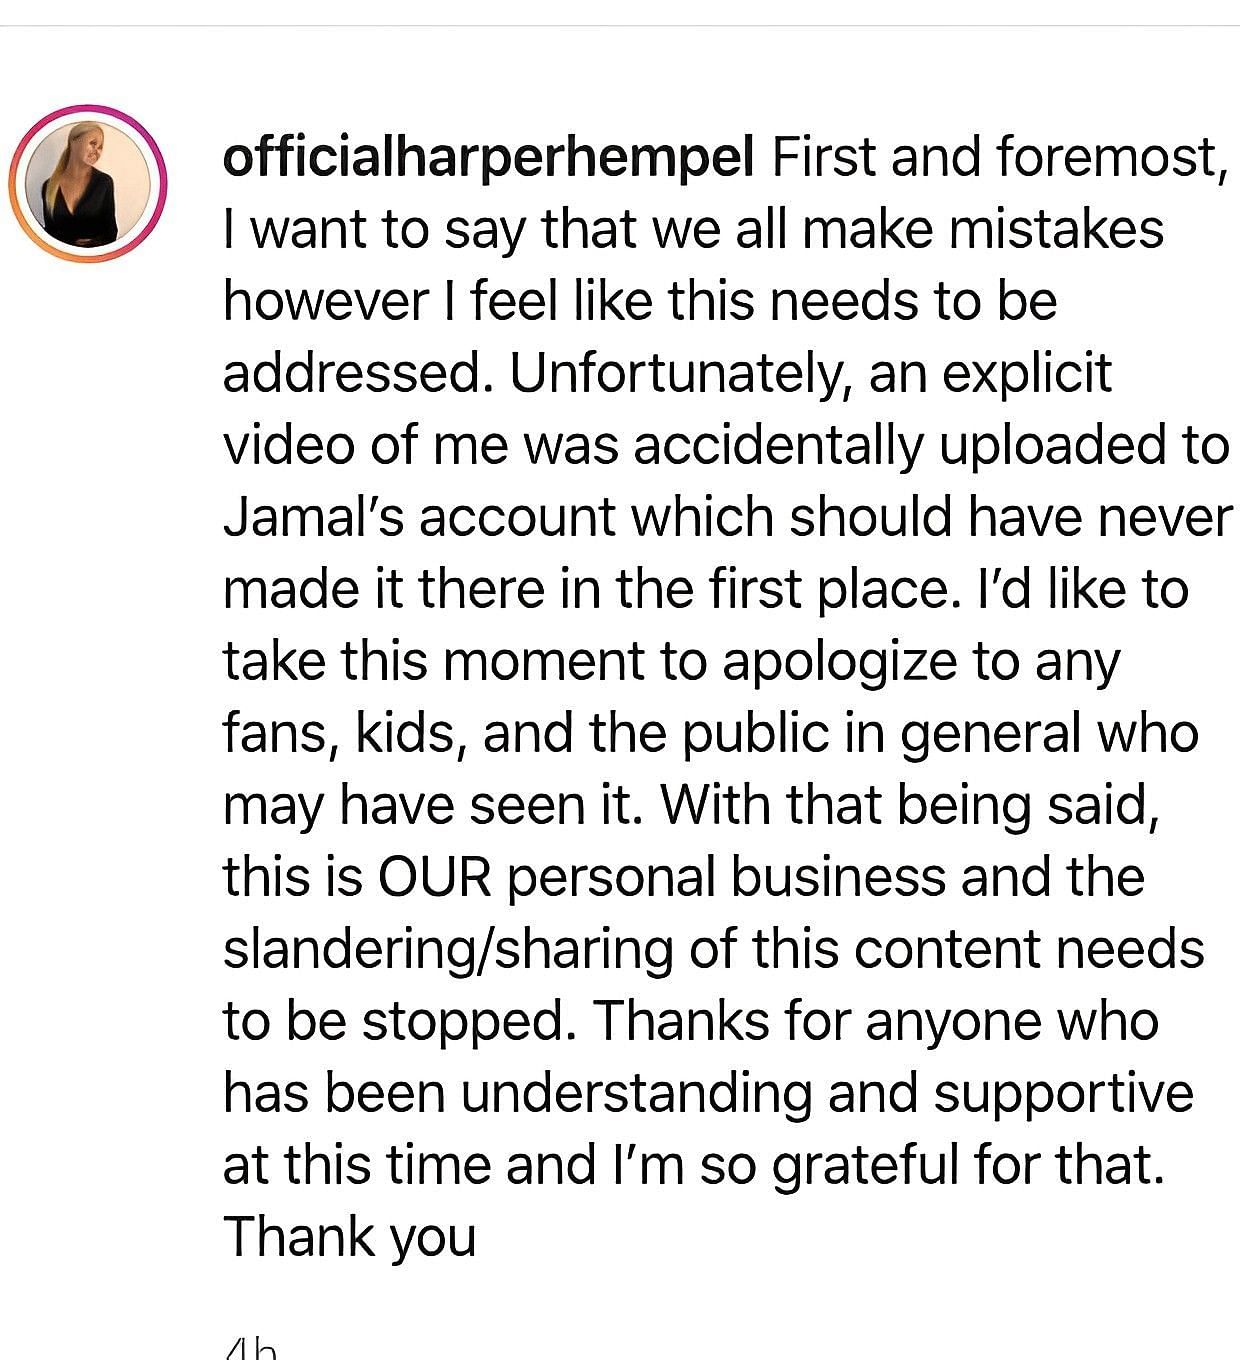 Hempel apologizes on Instagram